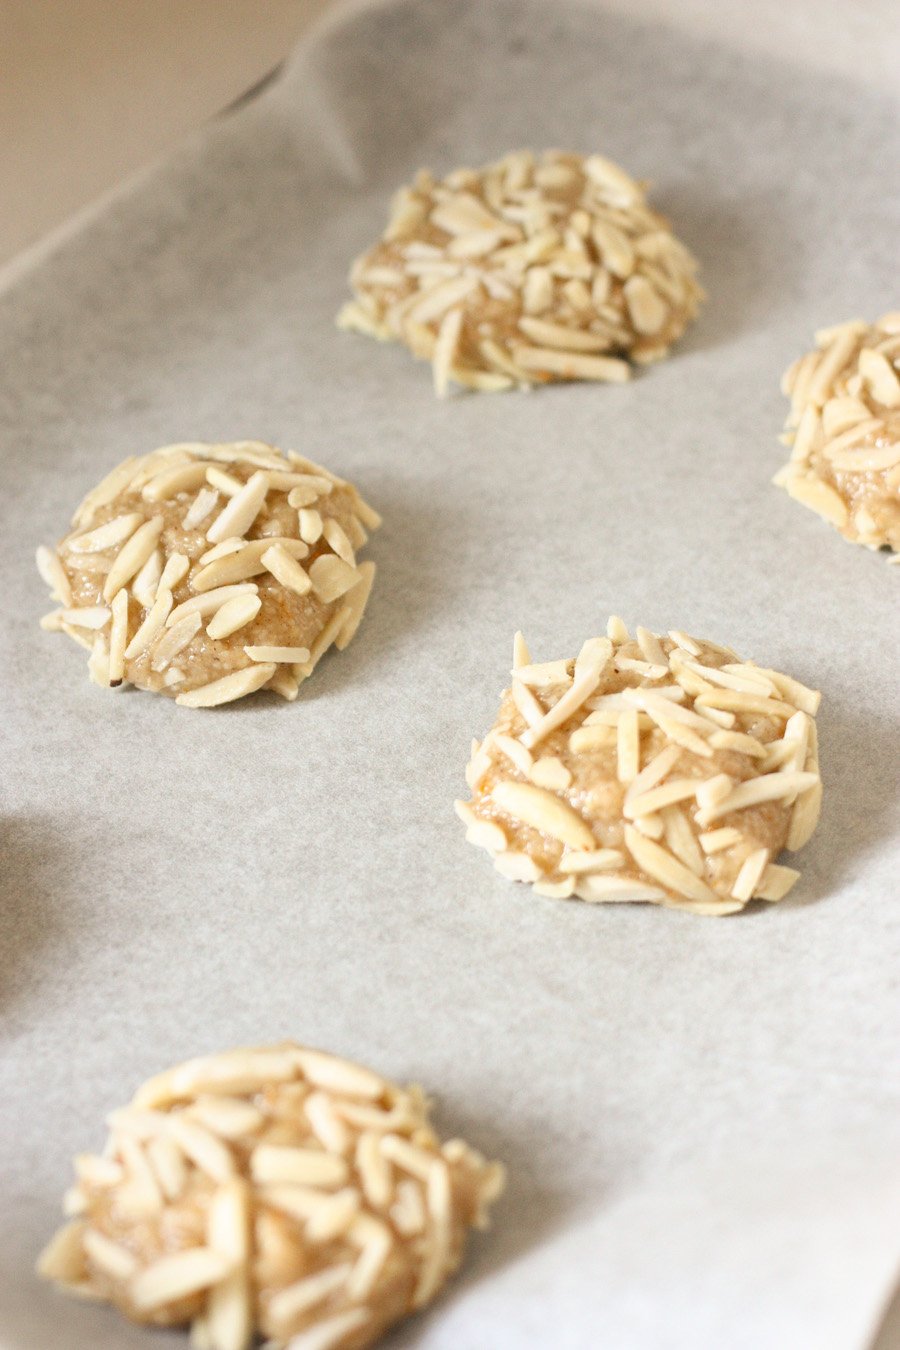 Almond Cookies before baking